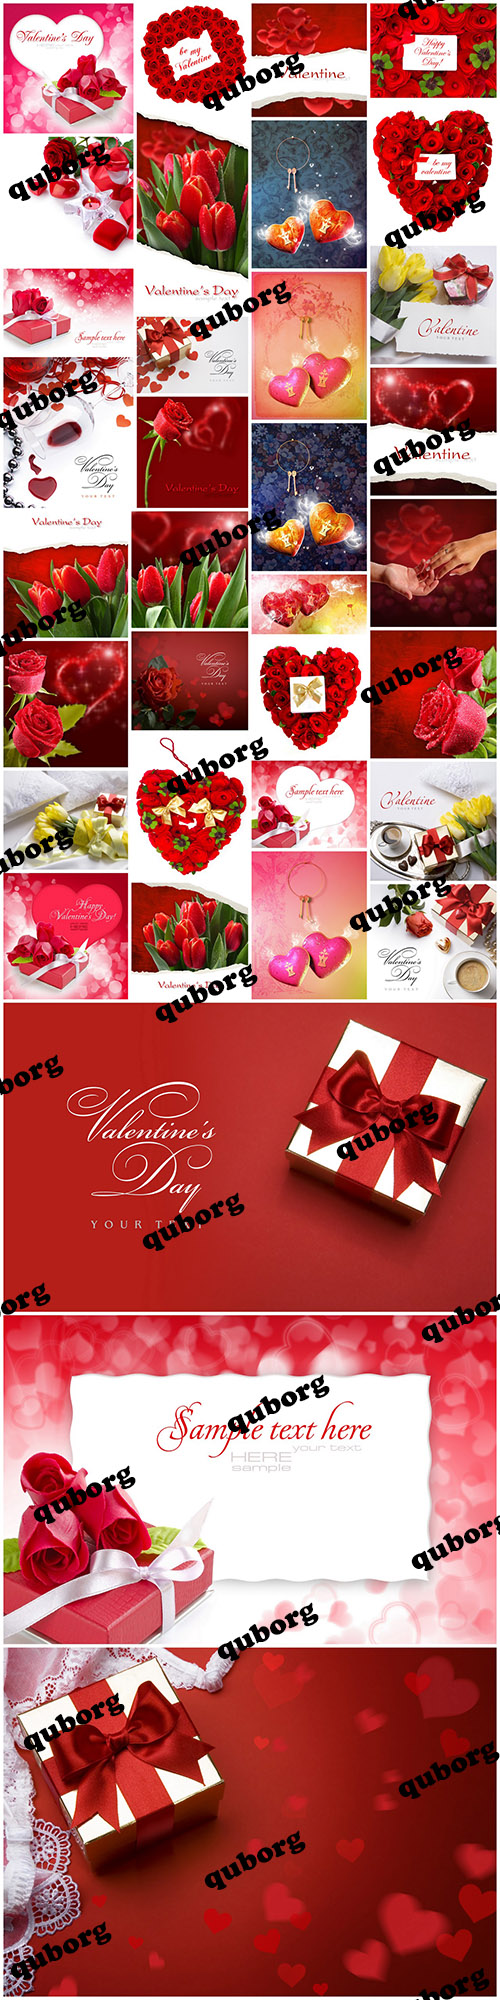 Stock Photos - Valentine Collection